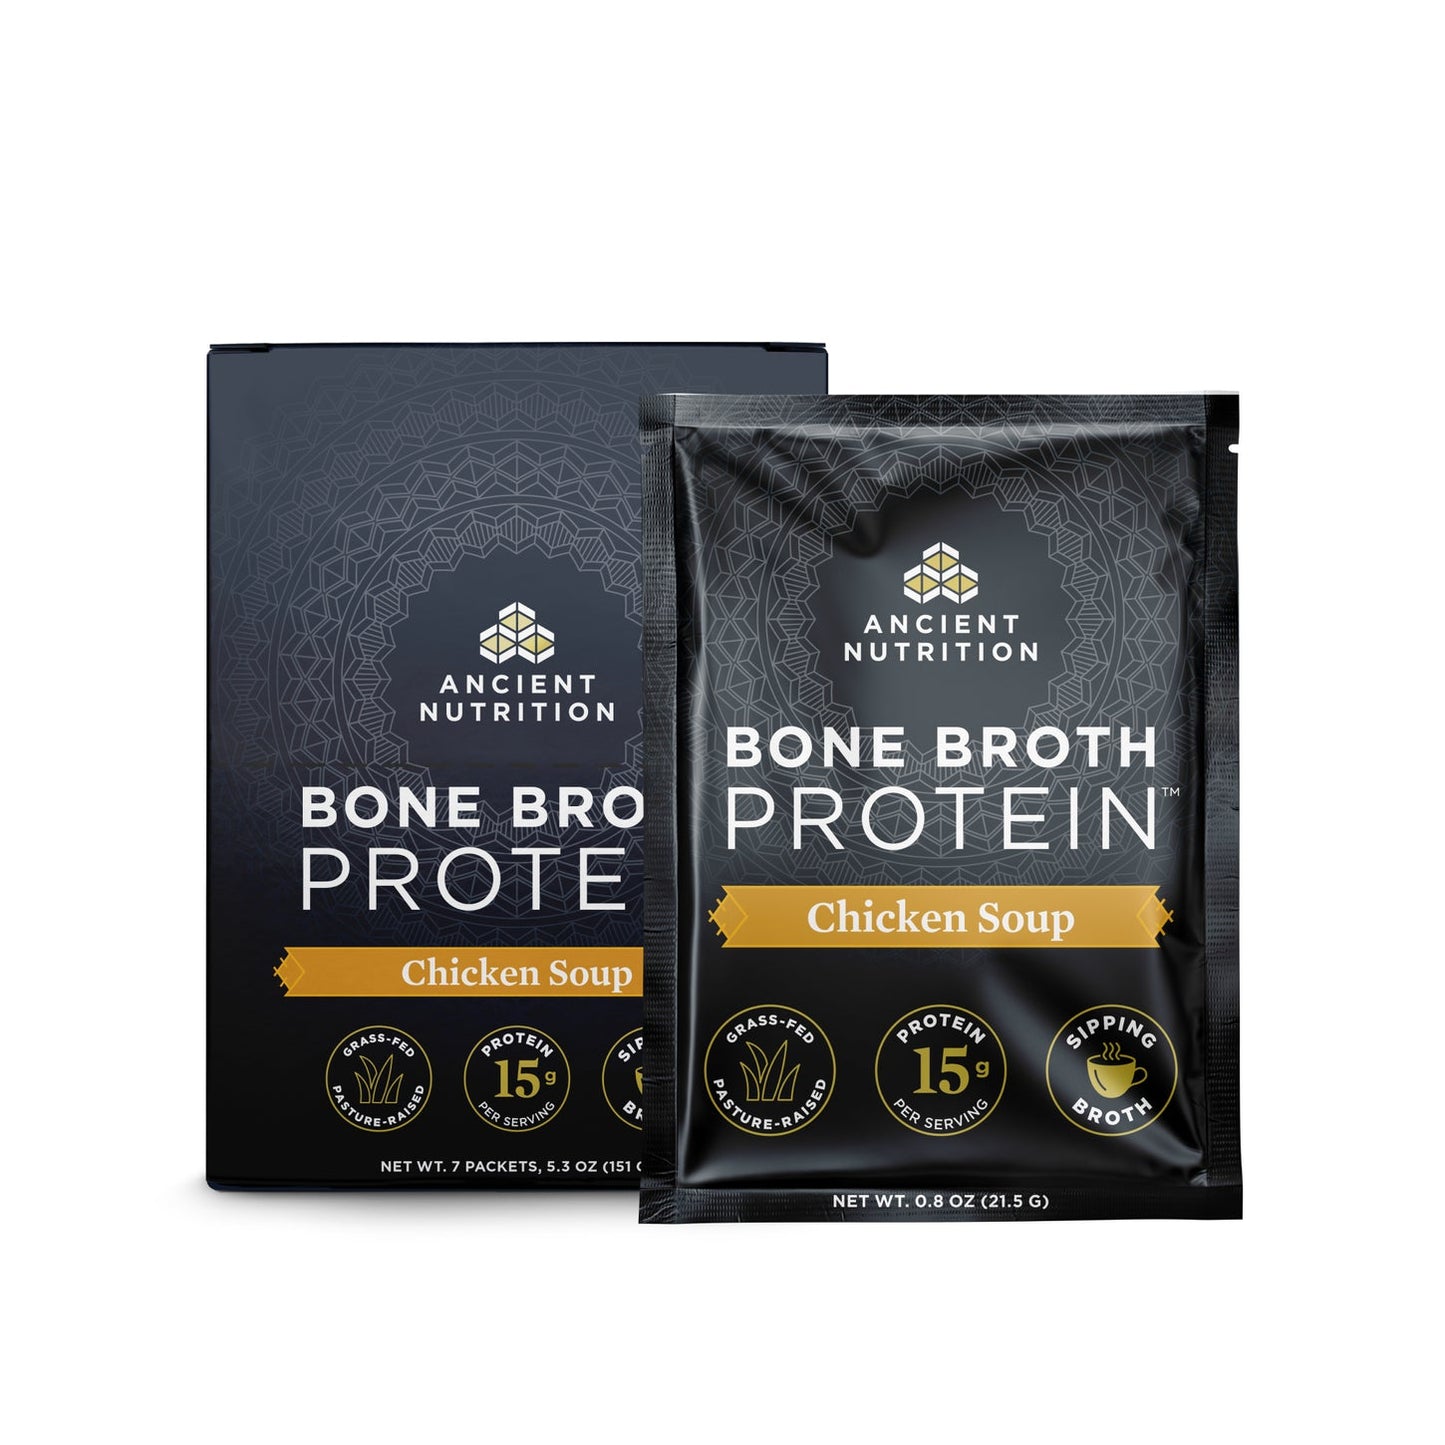 Bone Broth Protein Chicken Soup packet